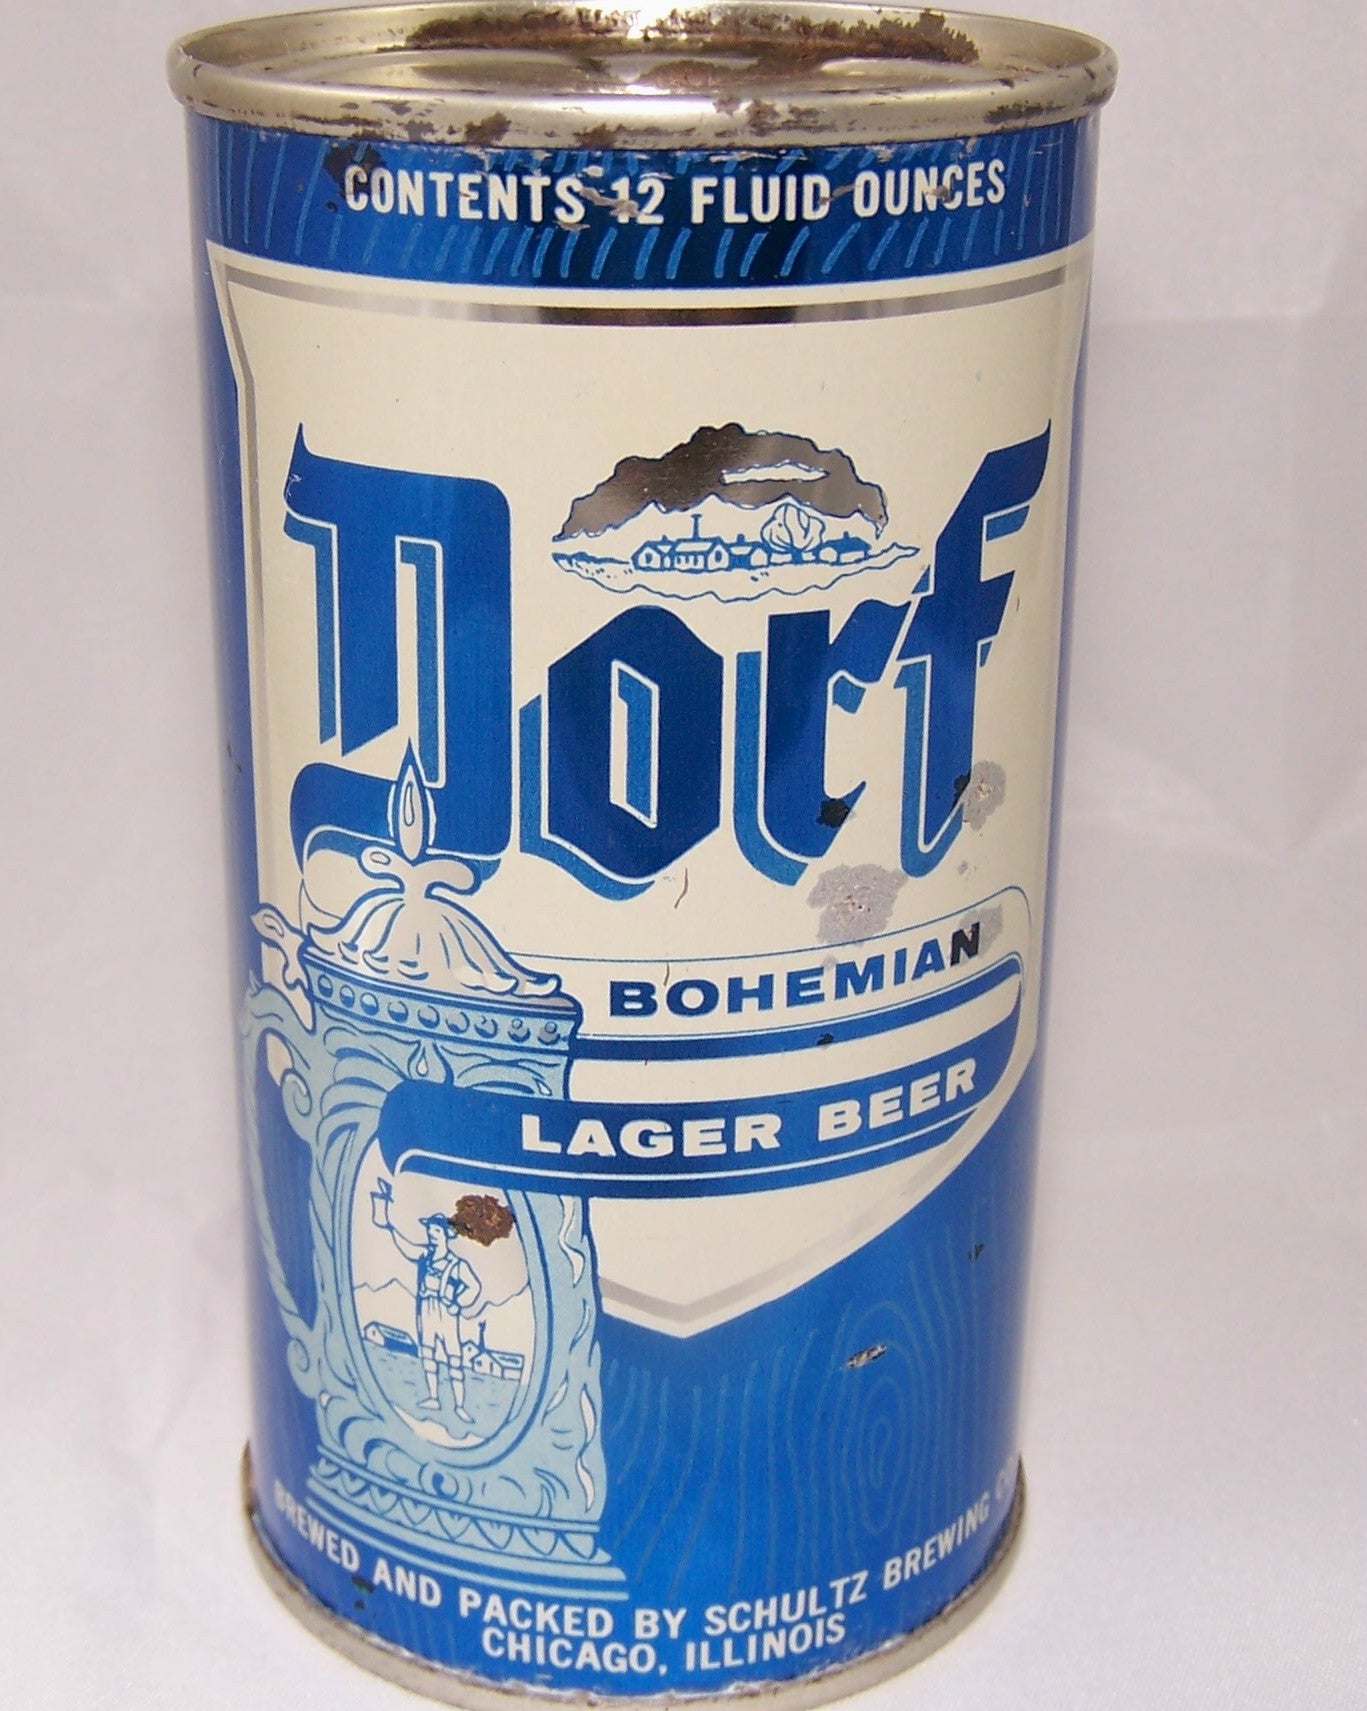 Dorf Bohemian Lager Beer, USBC 54-25, Grade 1 Sold on 5/11/15